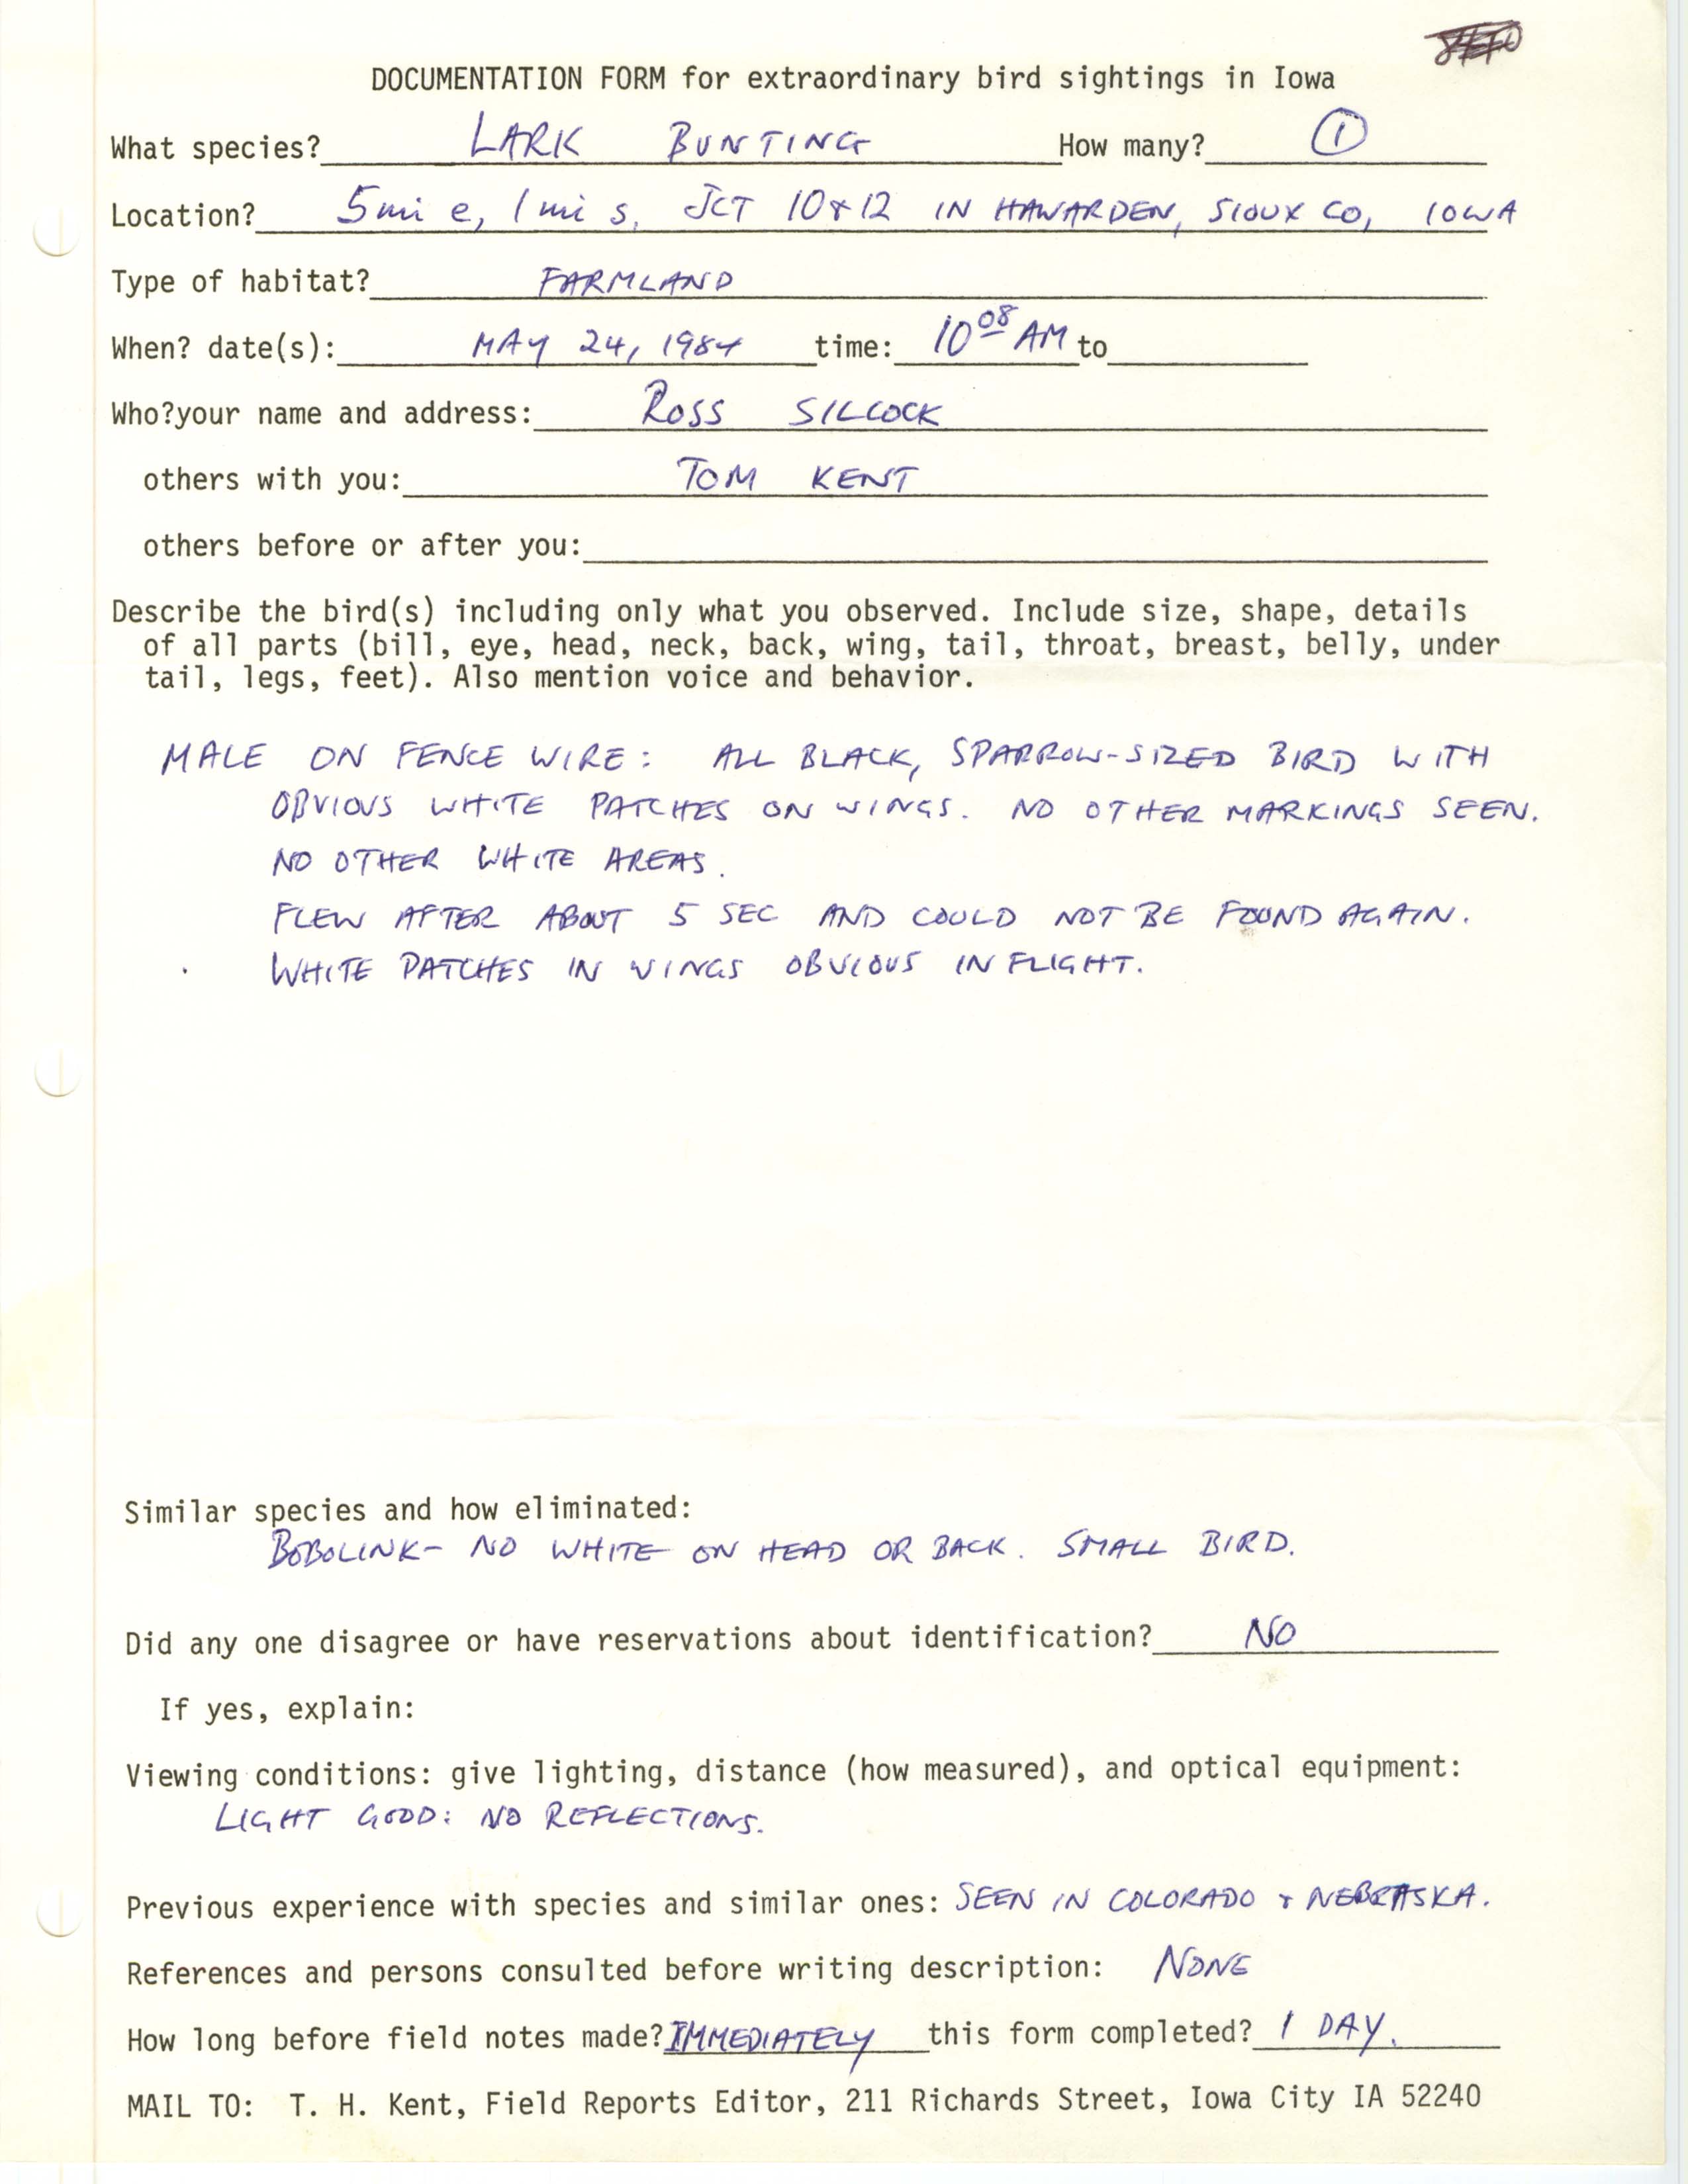 Rare bird documentation form for Lark Bunting southeast of Hawarden, 1984